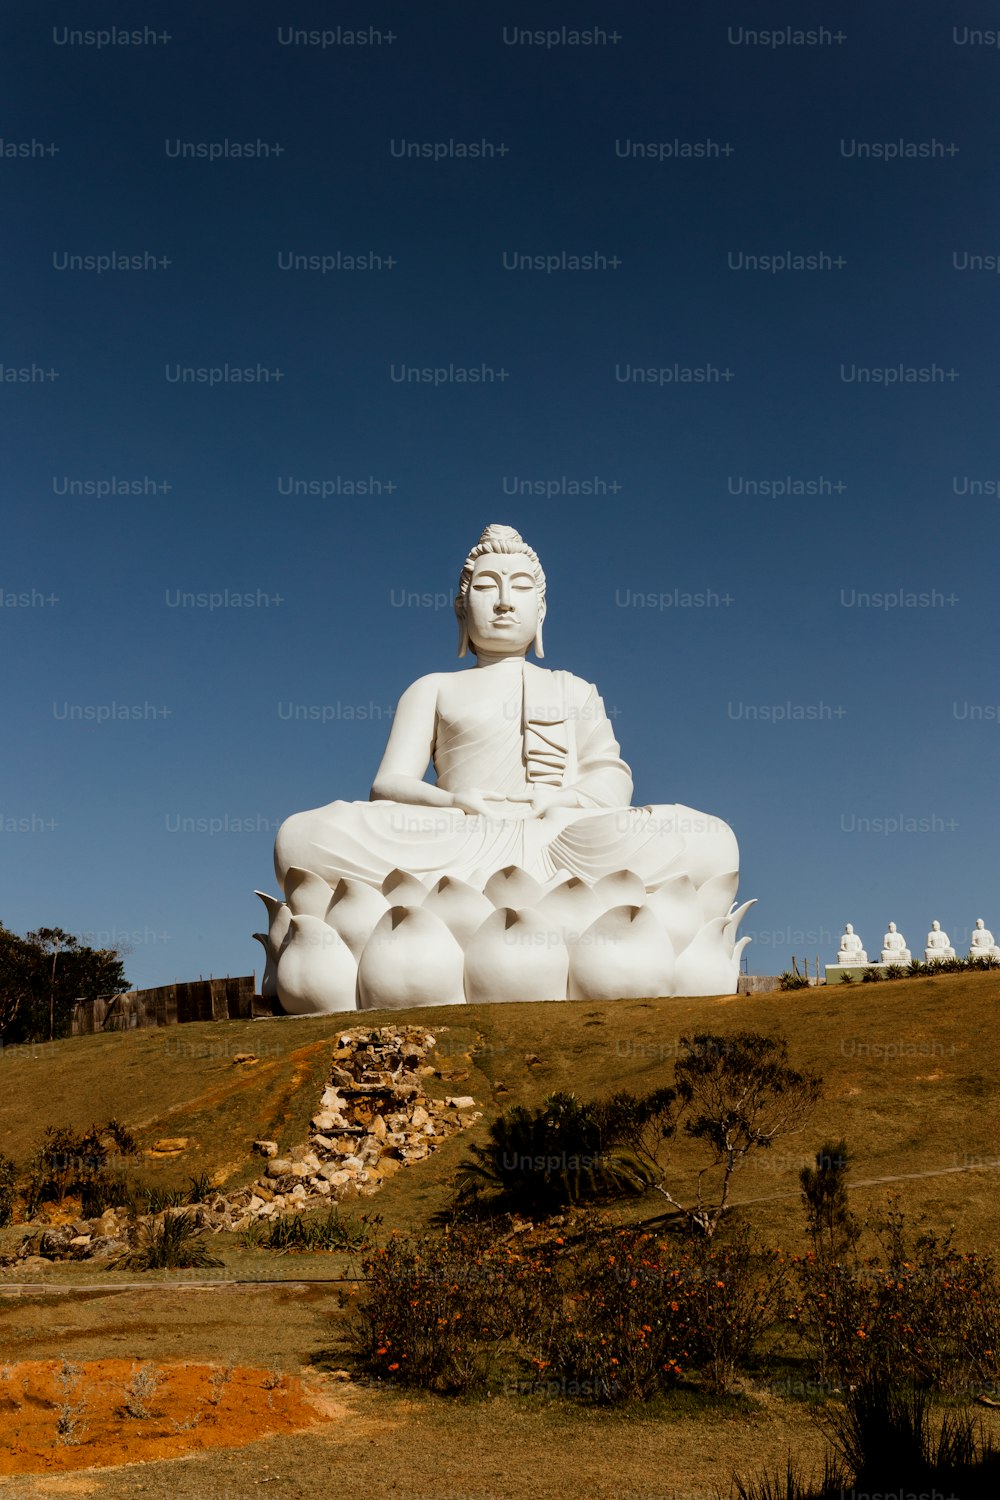 Una gran estatua blanca de Buda sentada en la cima de una colina